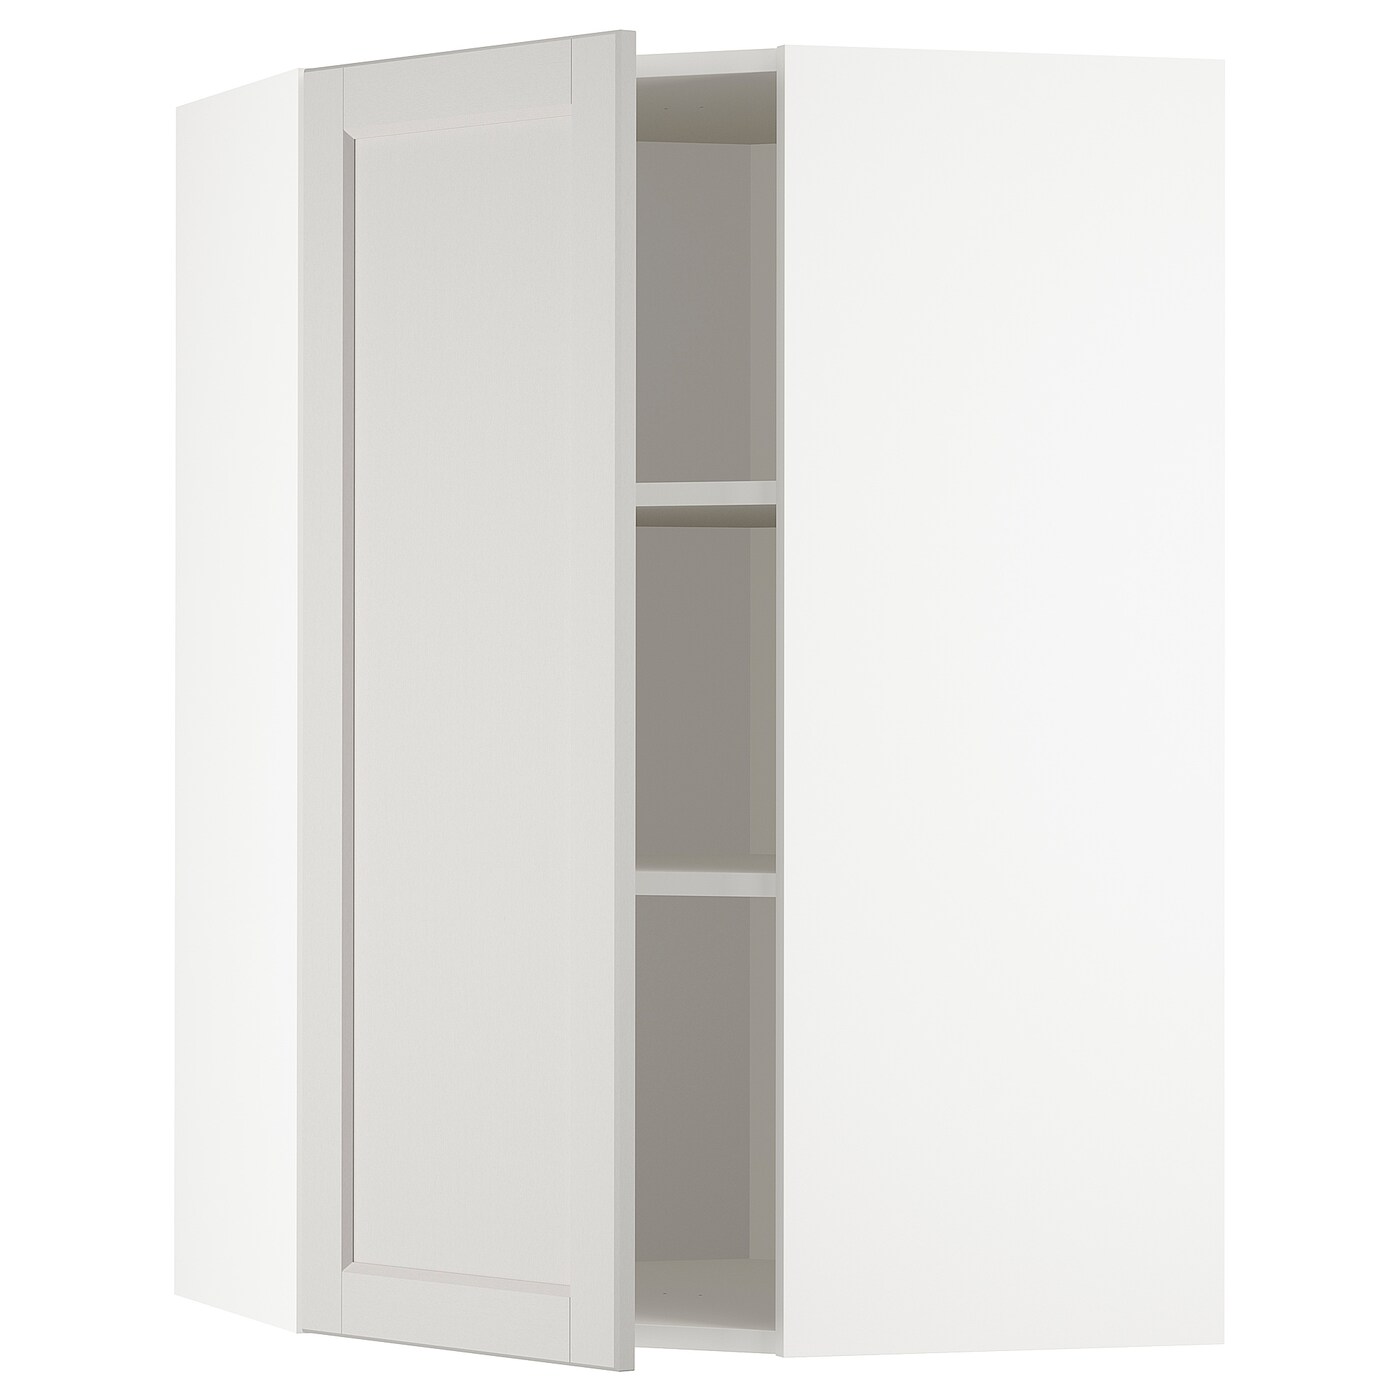 METOD Навесной шкаф - METOD IKEA/ МЕТОД ИКЕА, 100х68 см, белый/светло-серый